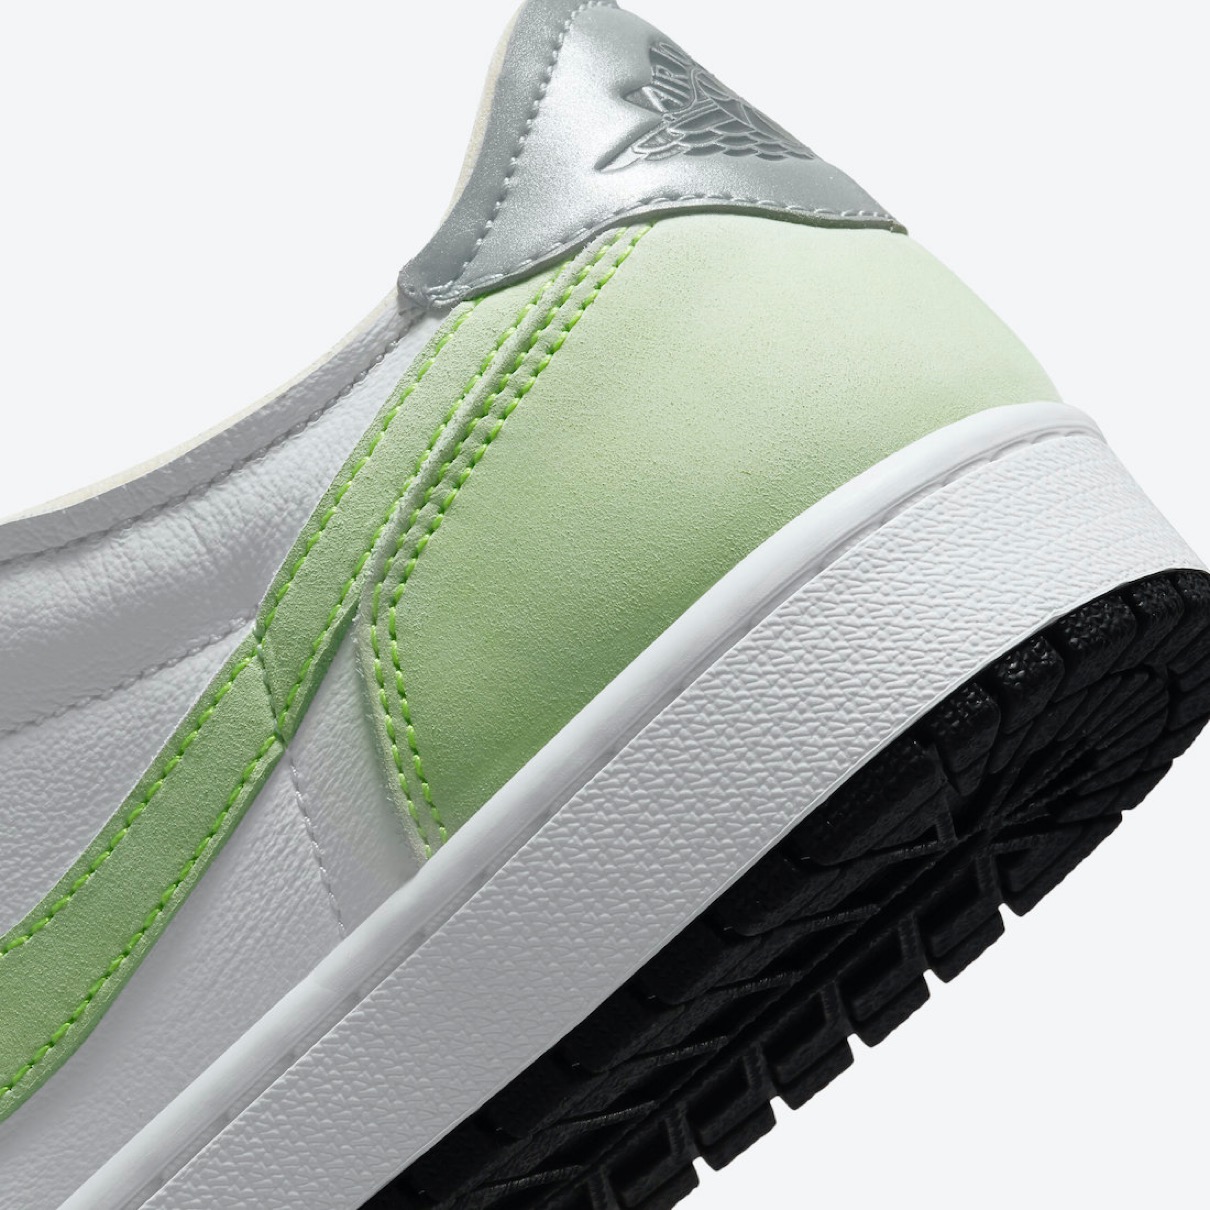 Nike】Air Jordan 1 Low OG “Ghost Green”が国内5月21日に発売予定 